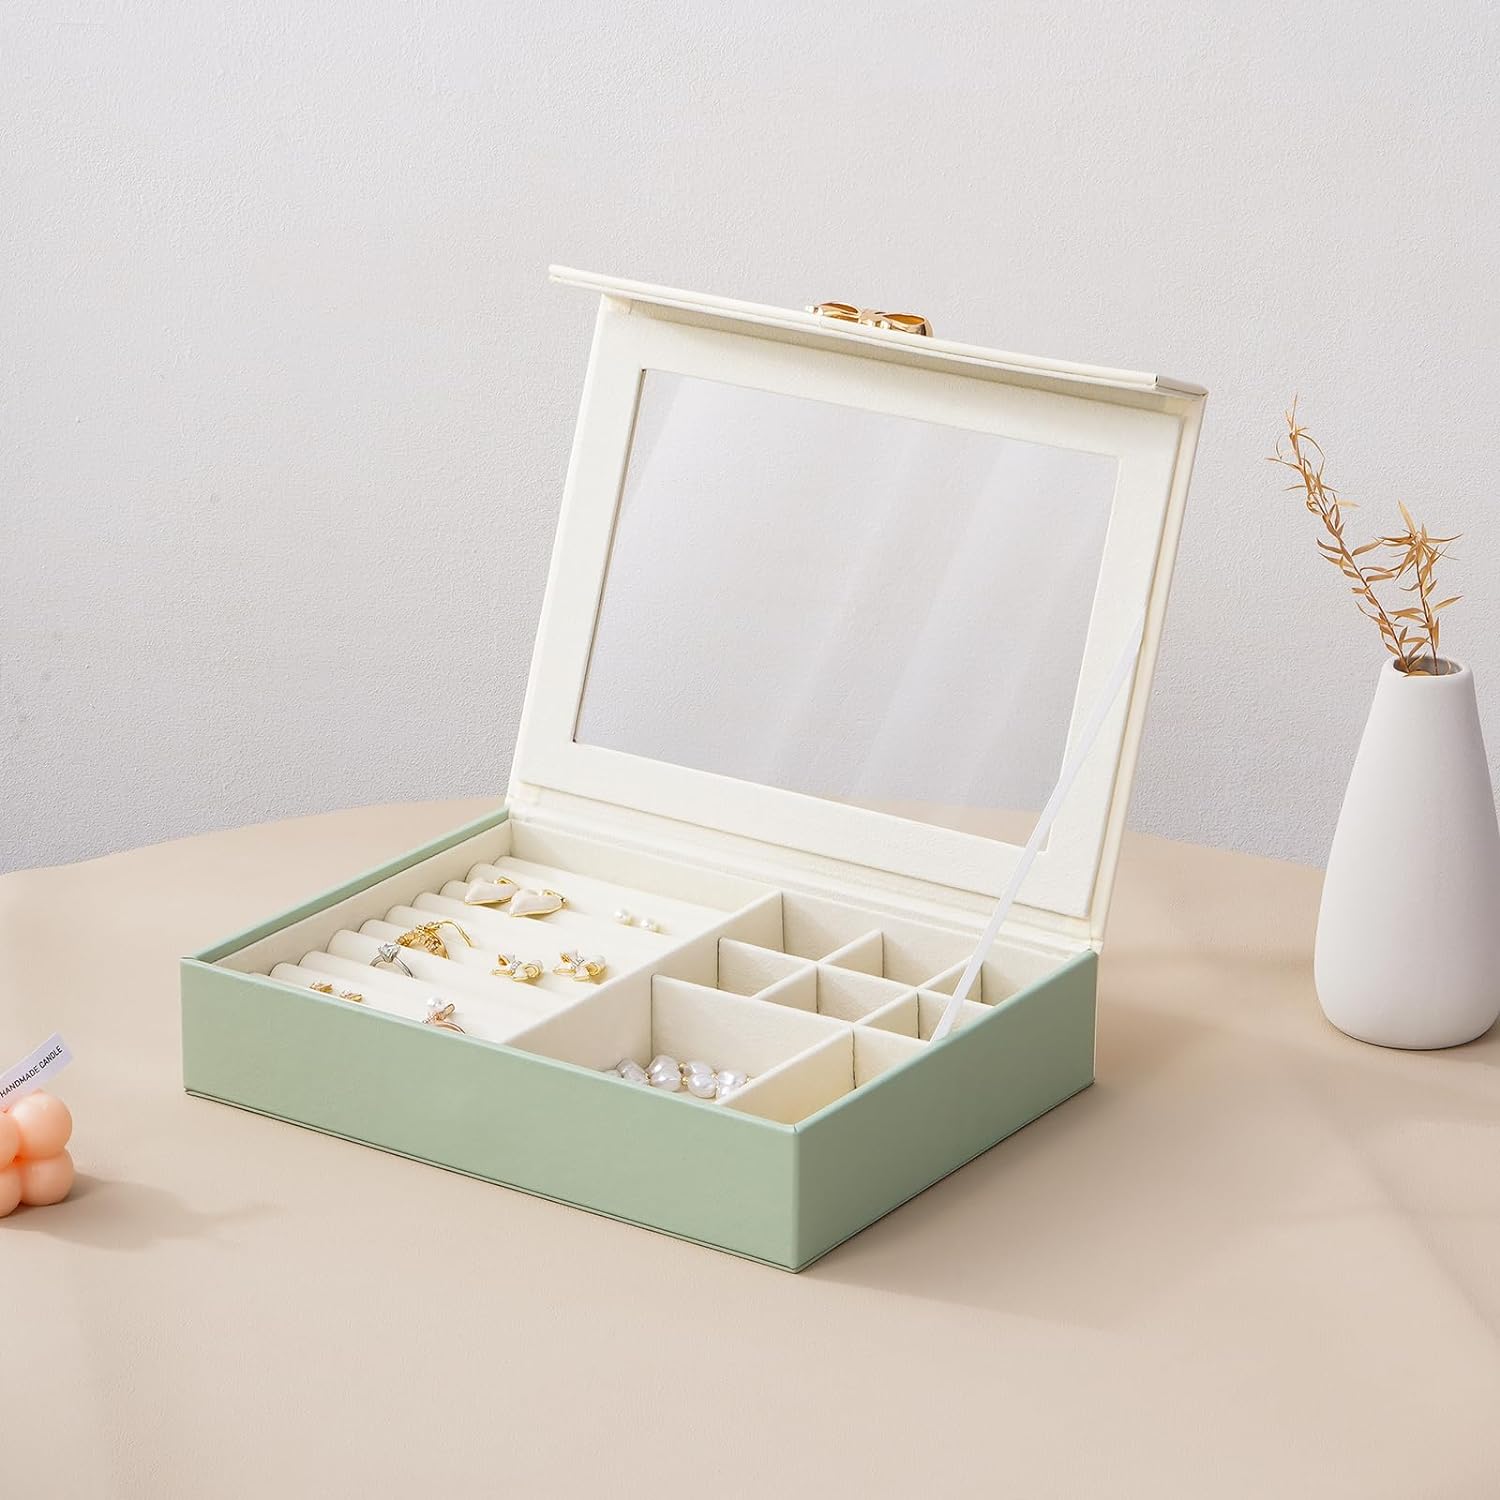 Jewelry and Accessory Organizer Box